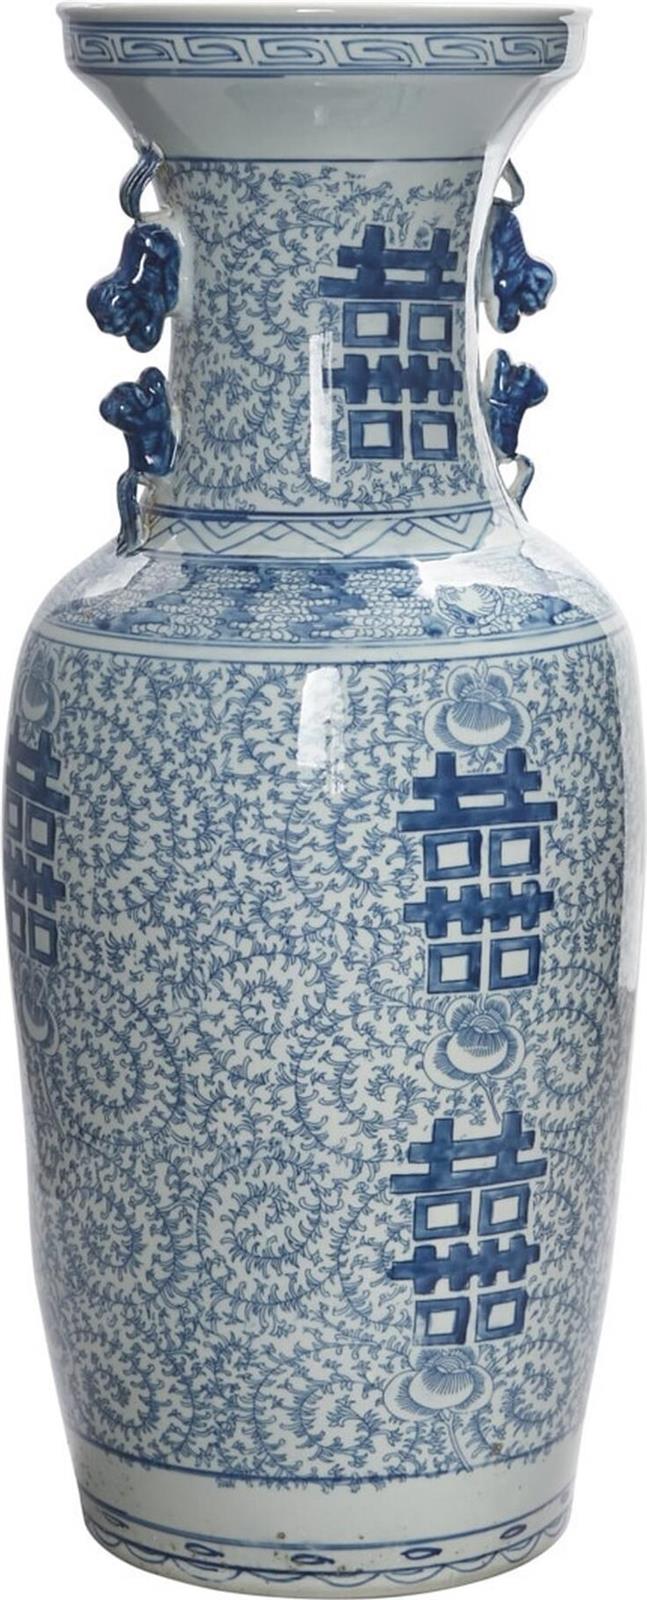 Flower Vase Double Happiness Blue White Ceramic-Image 2